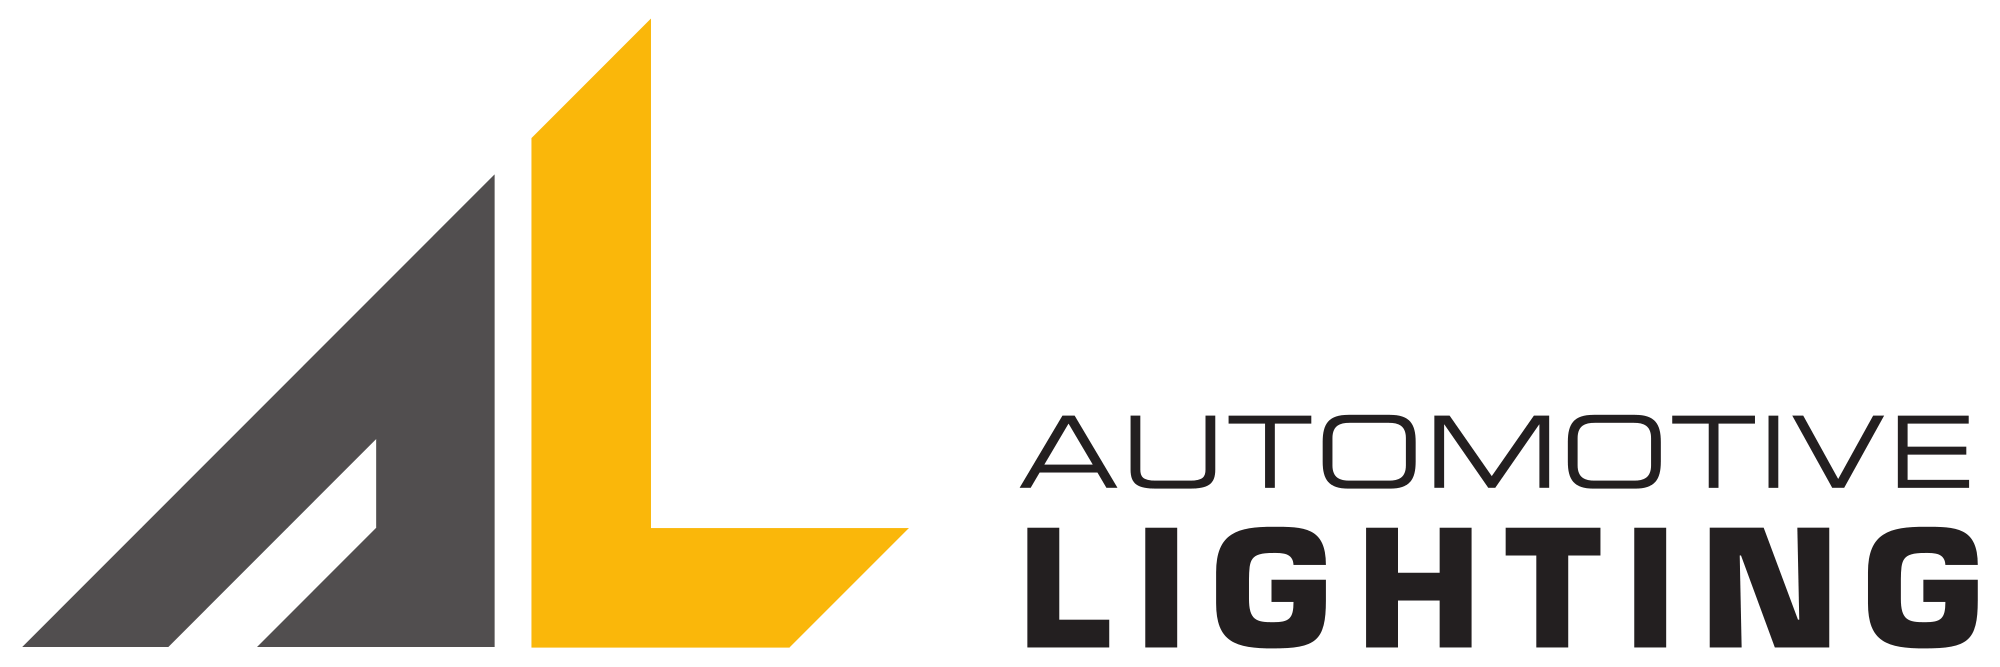 Lighting Logo - Automotive lighting logo.svg